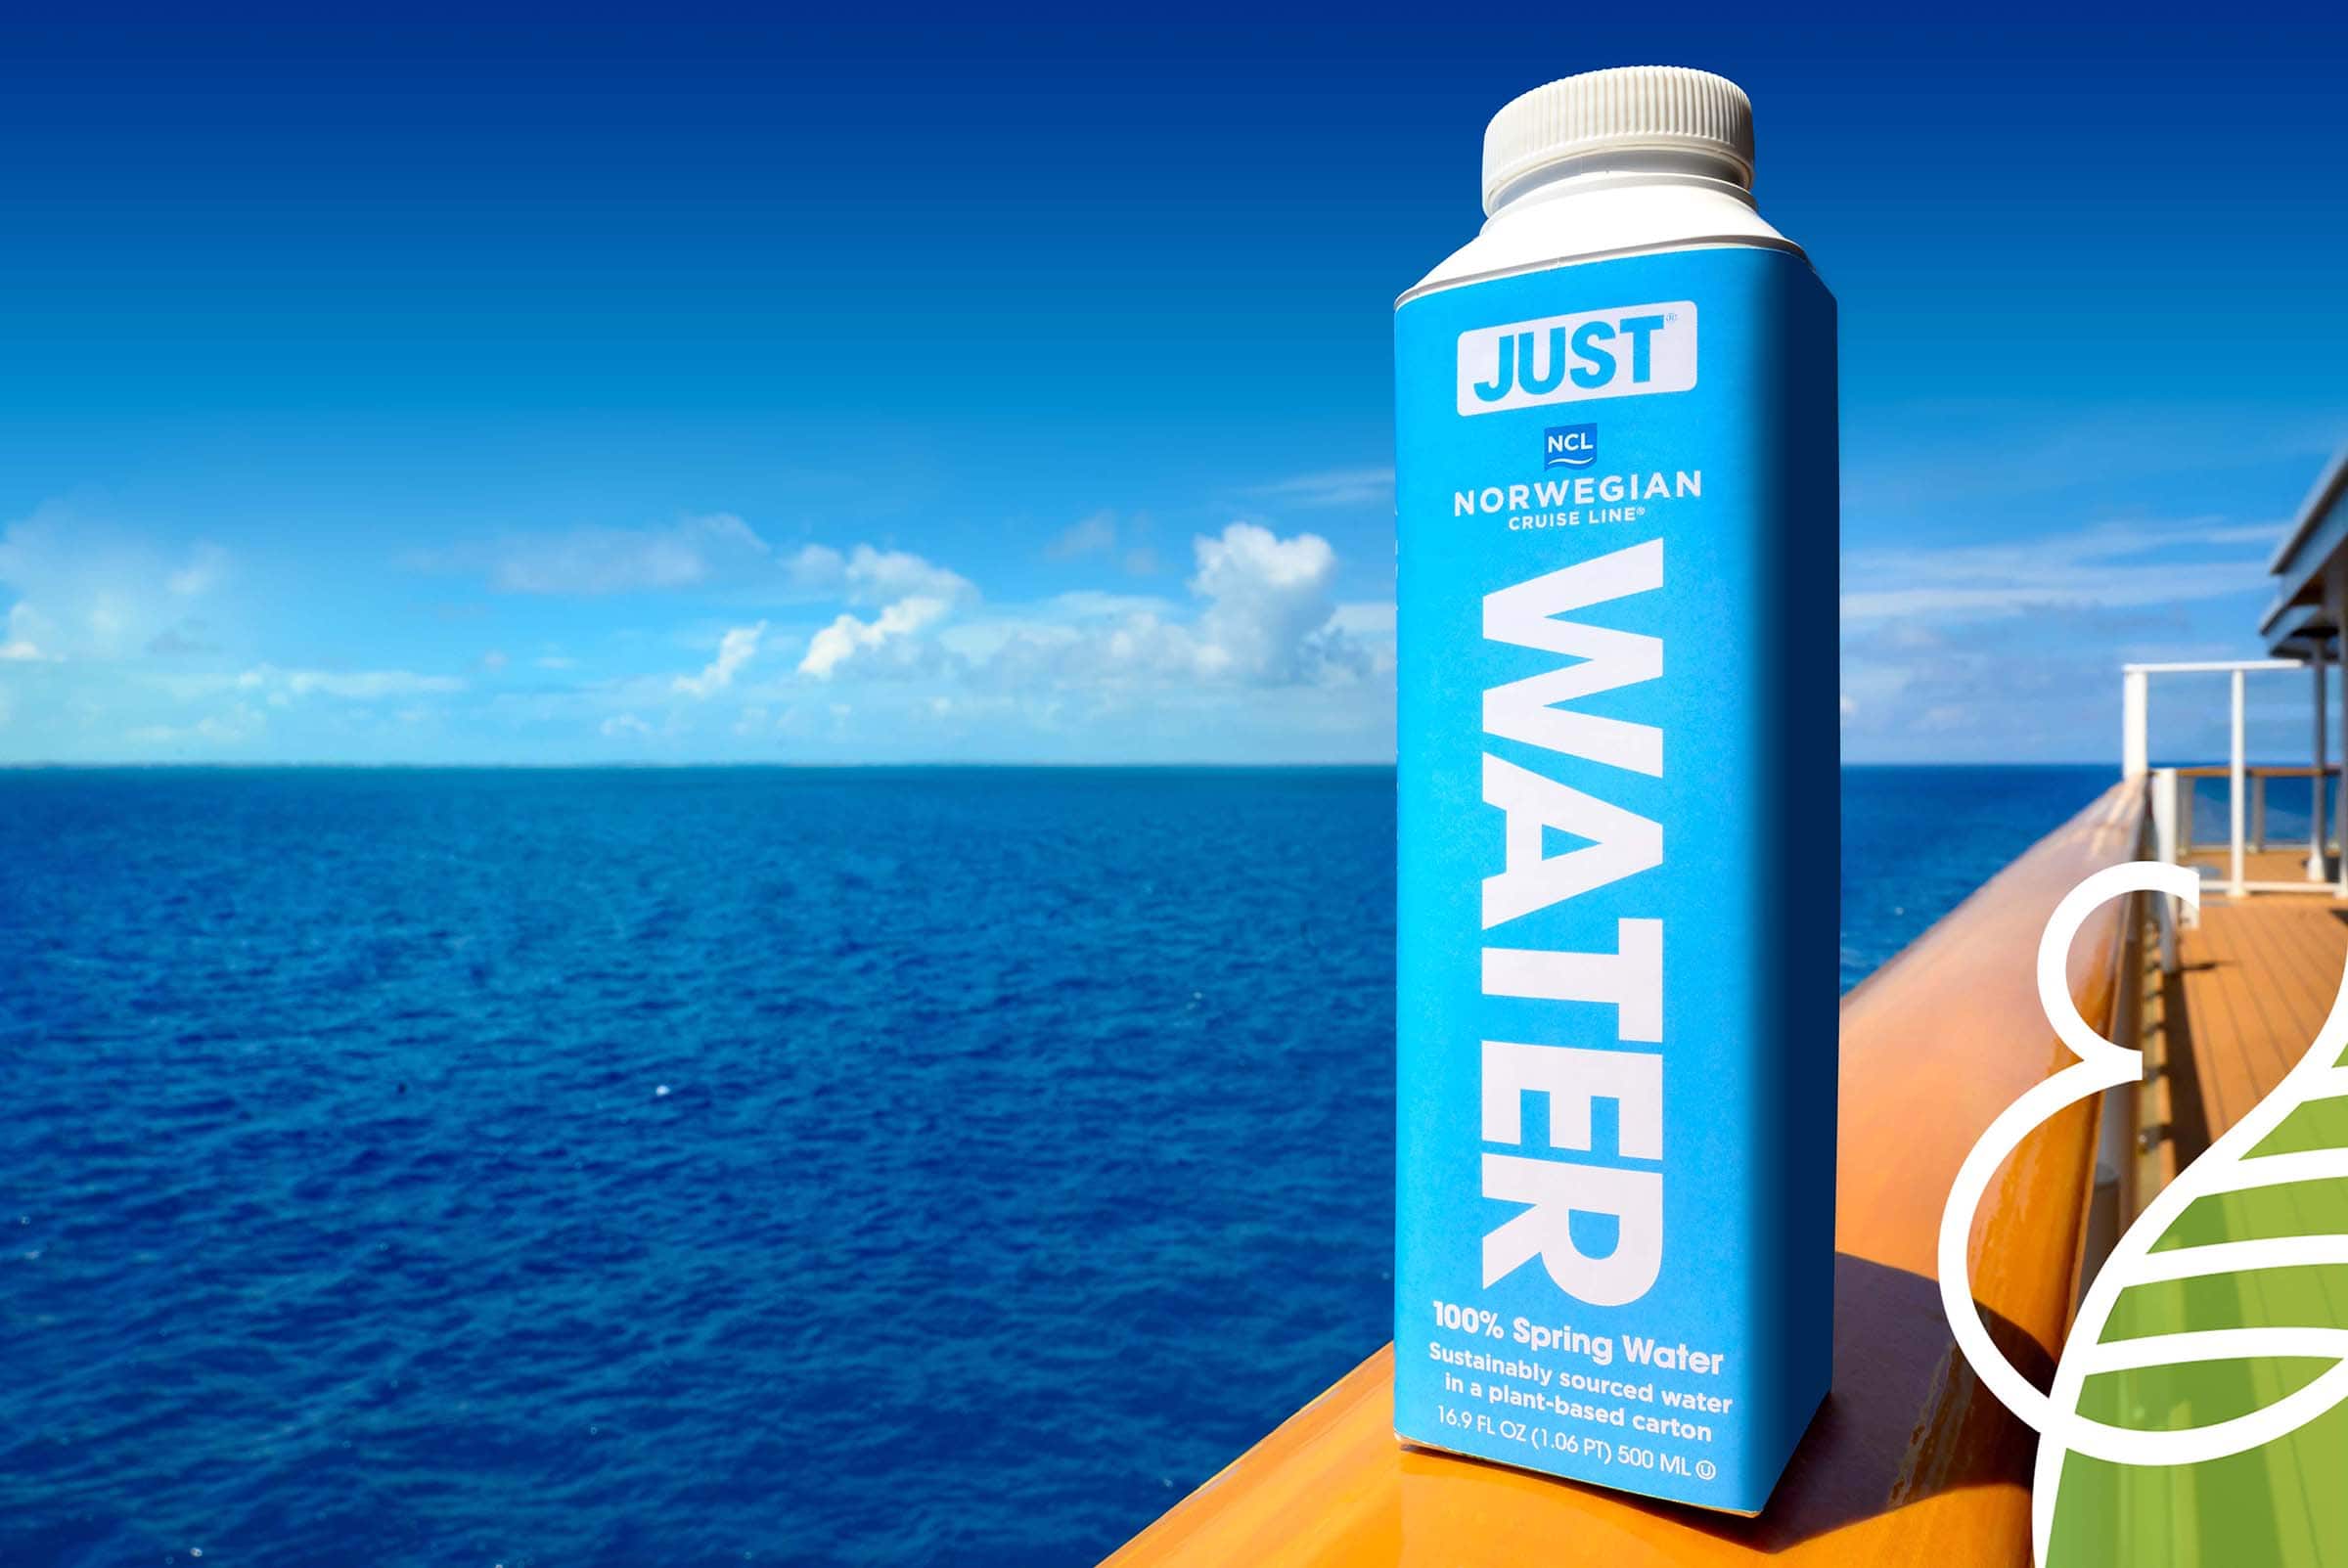 https://www.ncl.com/sites/default/files/just-water-norwegian-eliminates-single-use-water-bottles.jpg